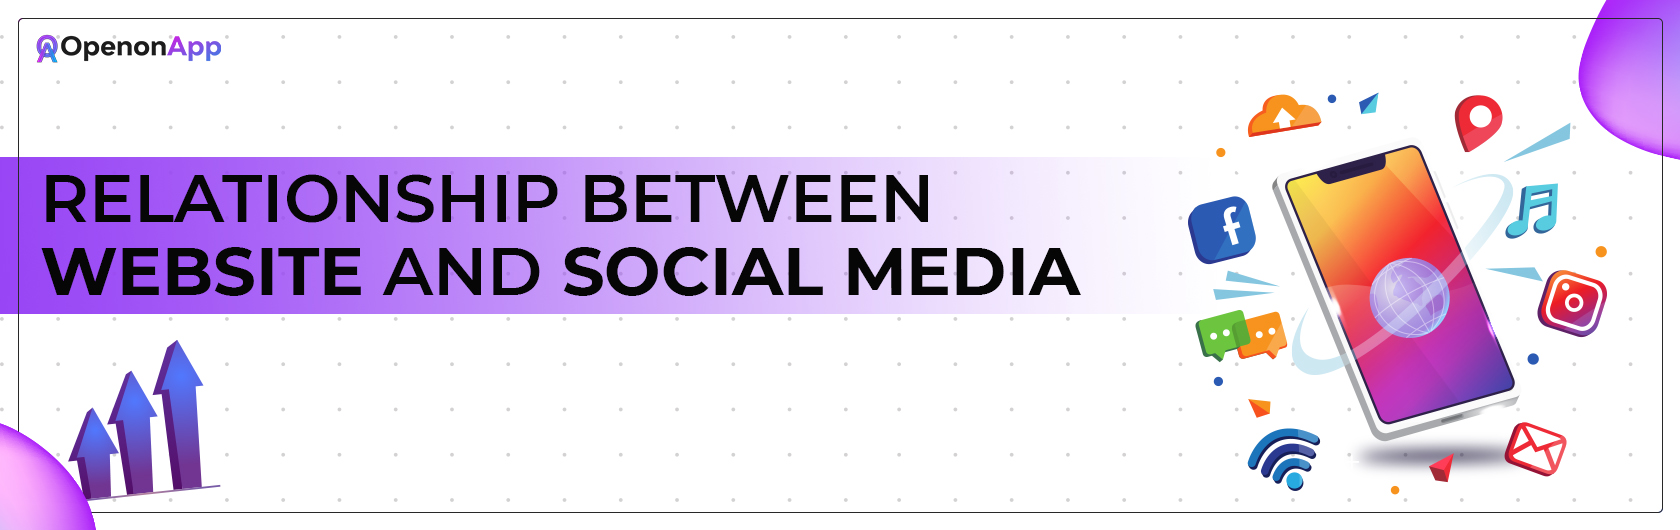 relationship between website and social media